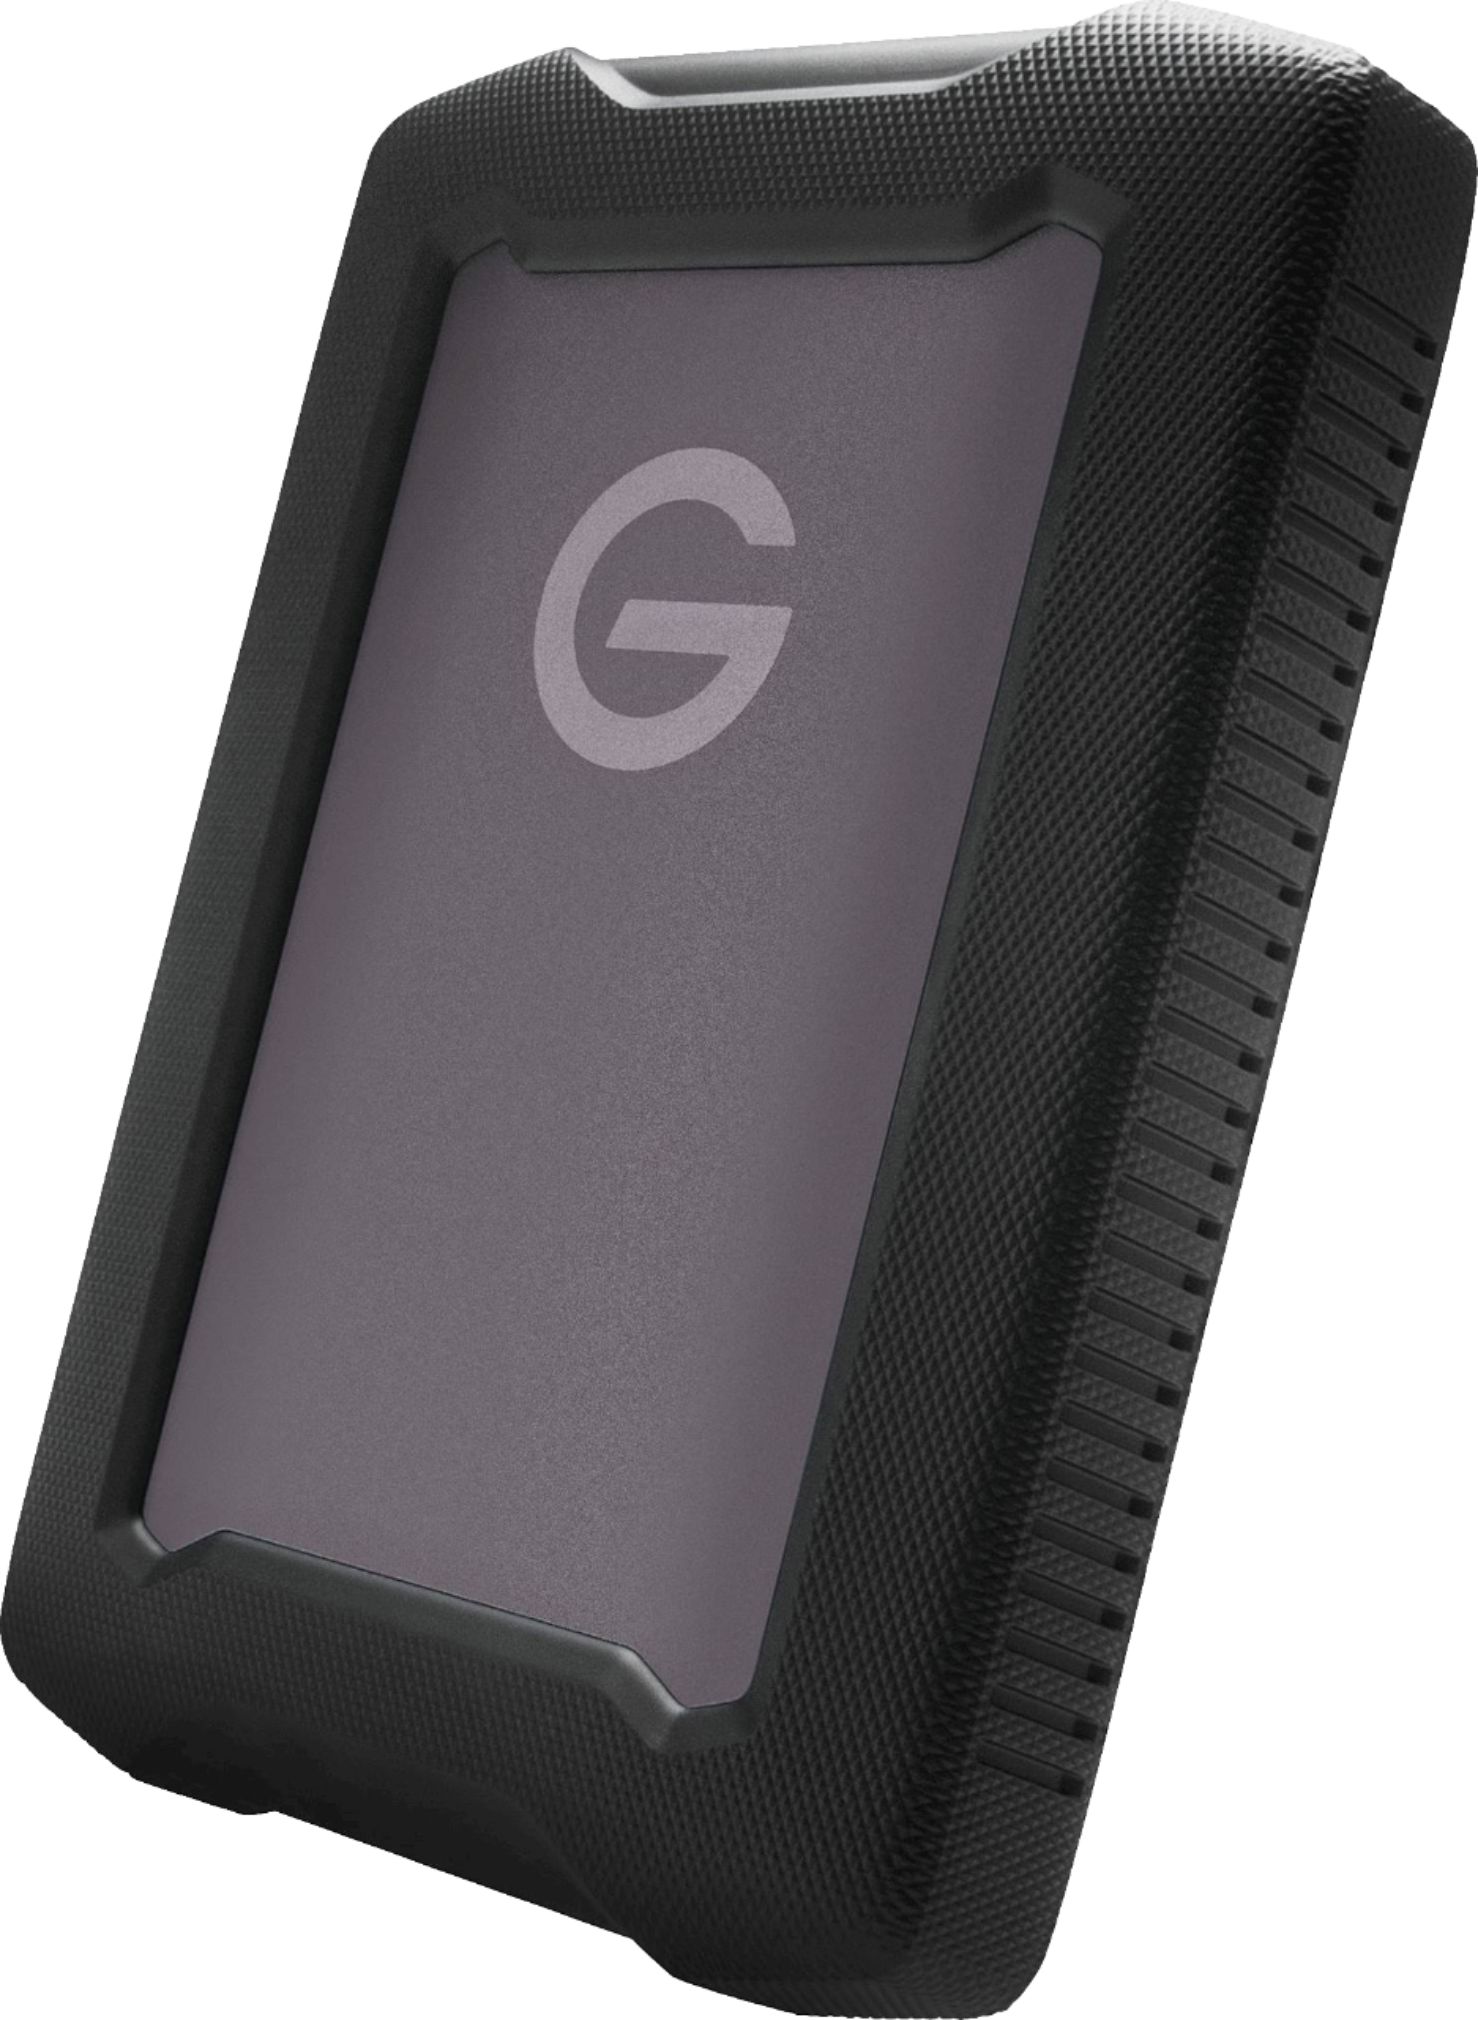 Best Buy: SanDisk Professional G-DRIVE ArmorATD 1TB External USB-C